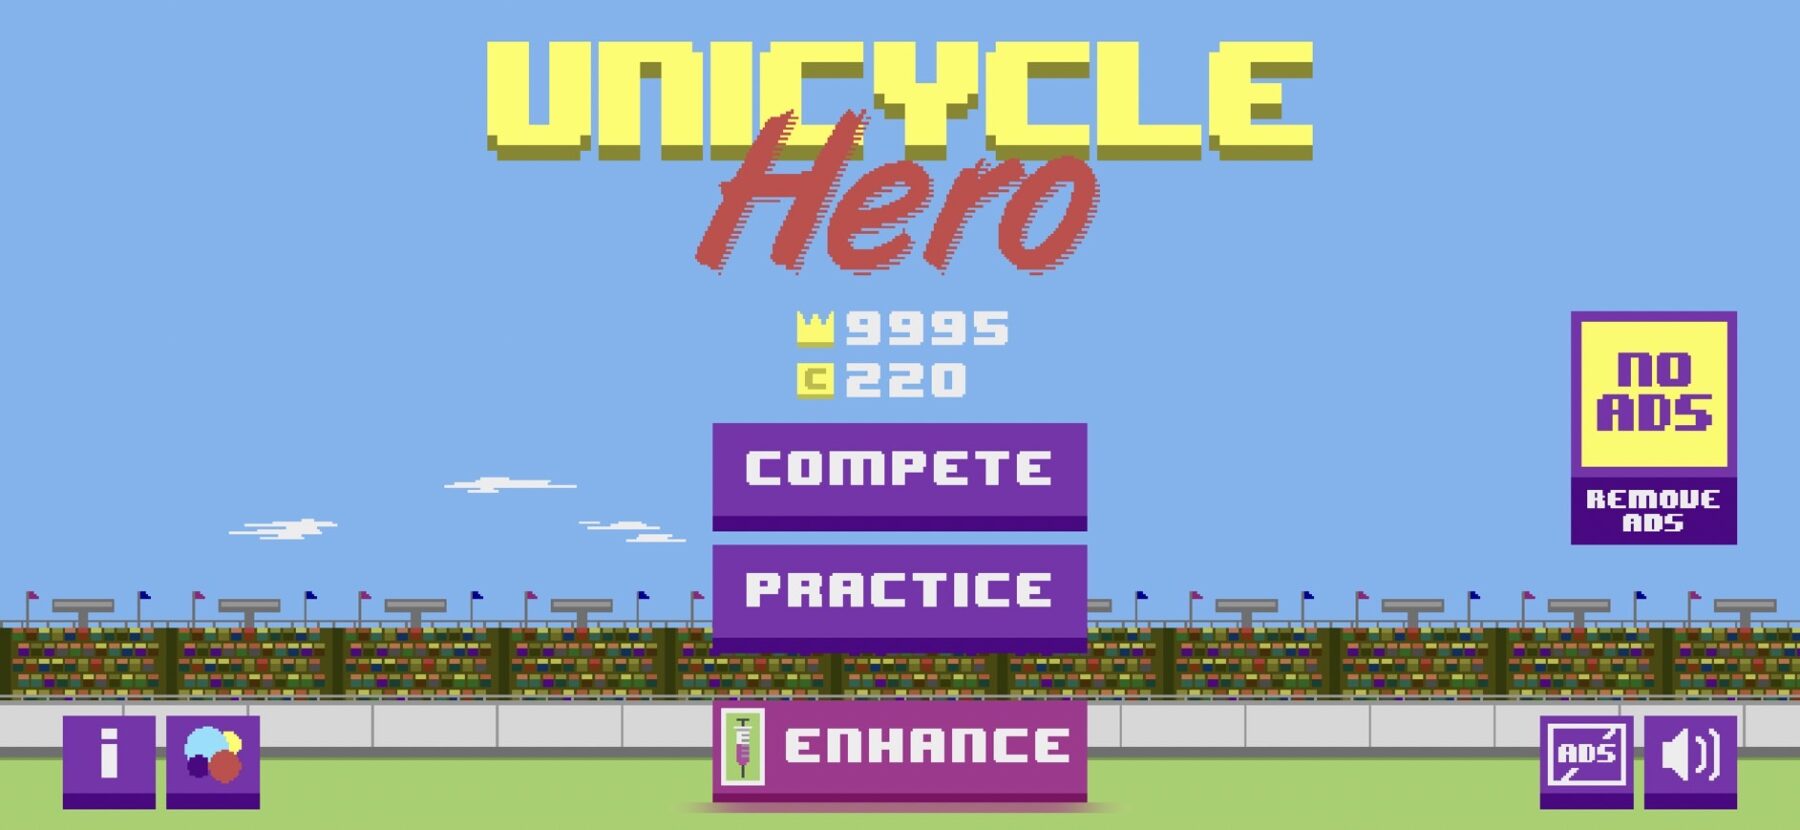 Unicycle Hero実際にプレイしてみたのでレビュー！